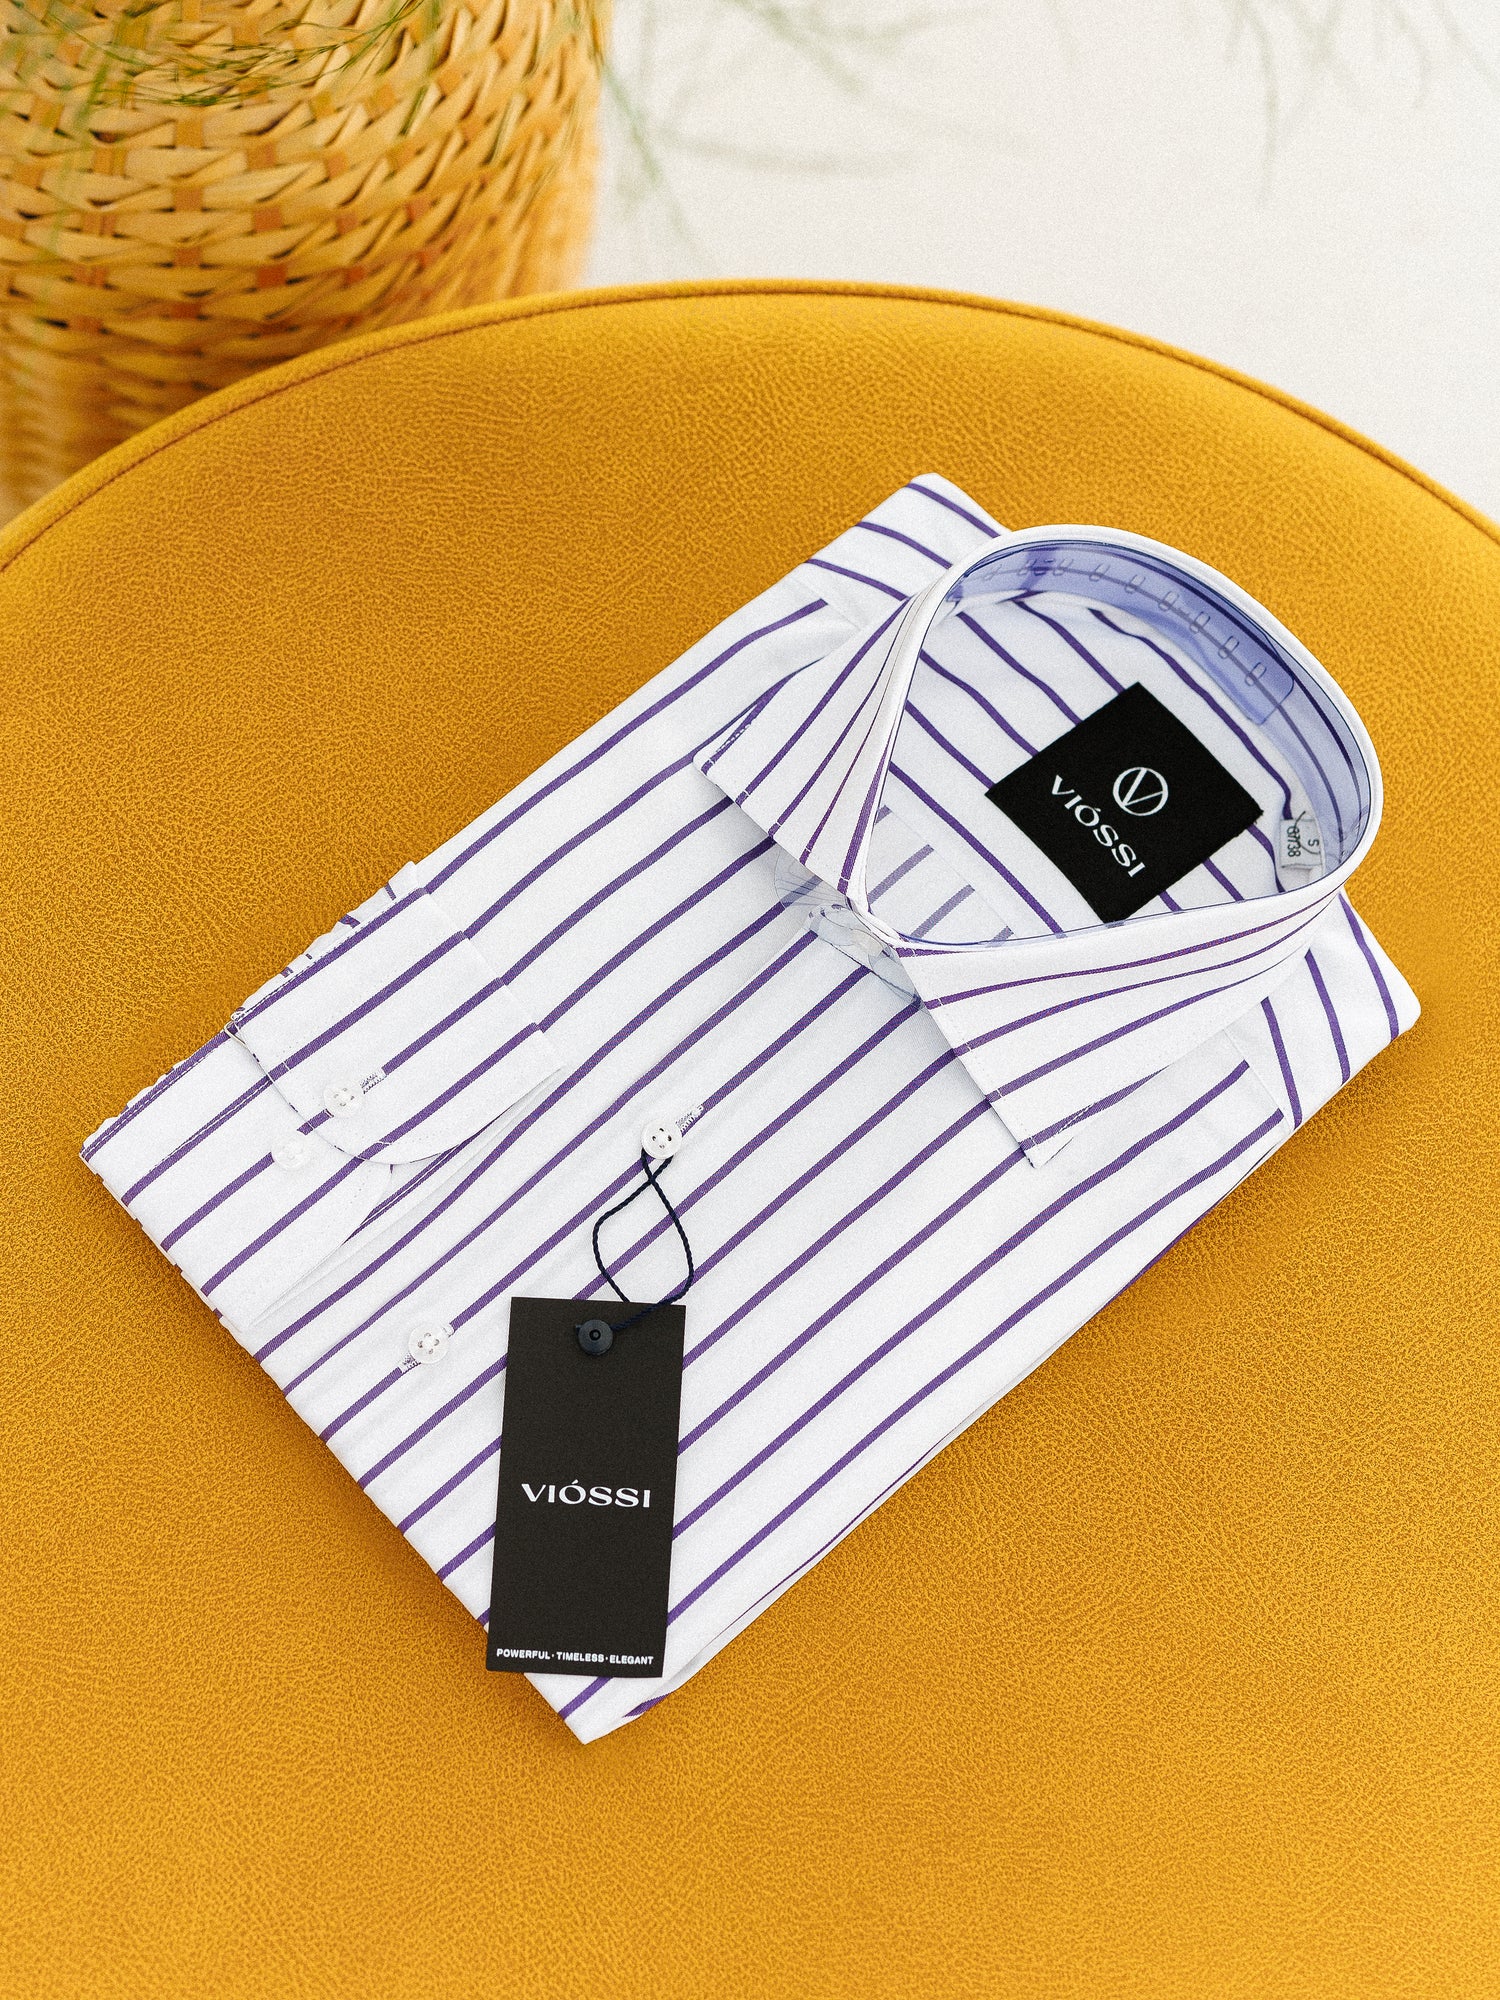 White-Purple Striped Italian Spread Collar Shirt